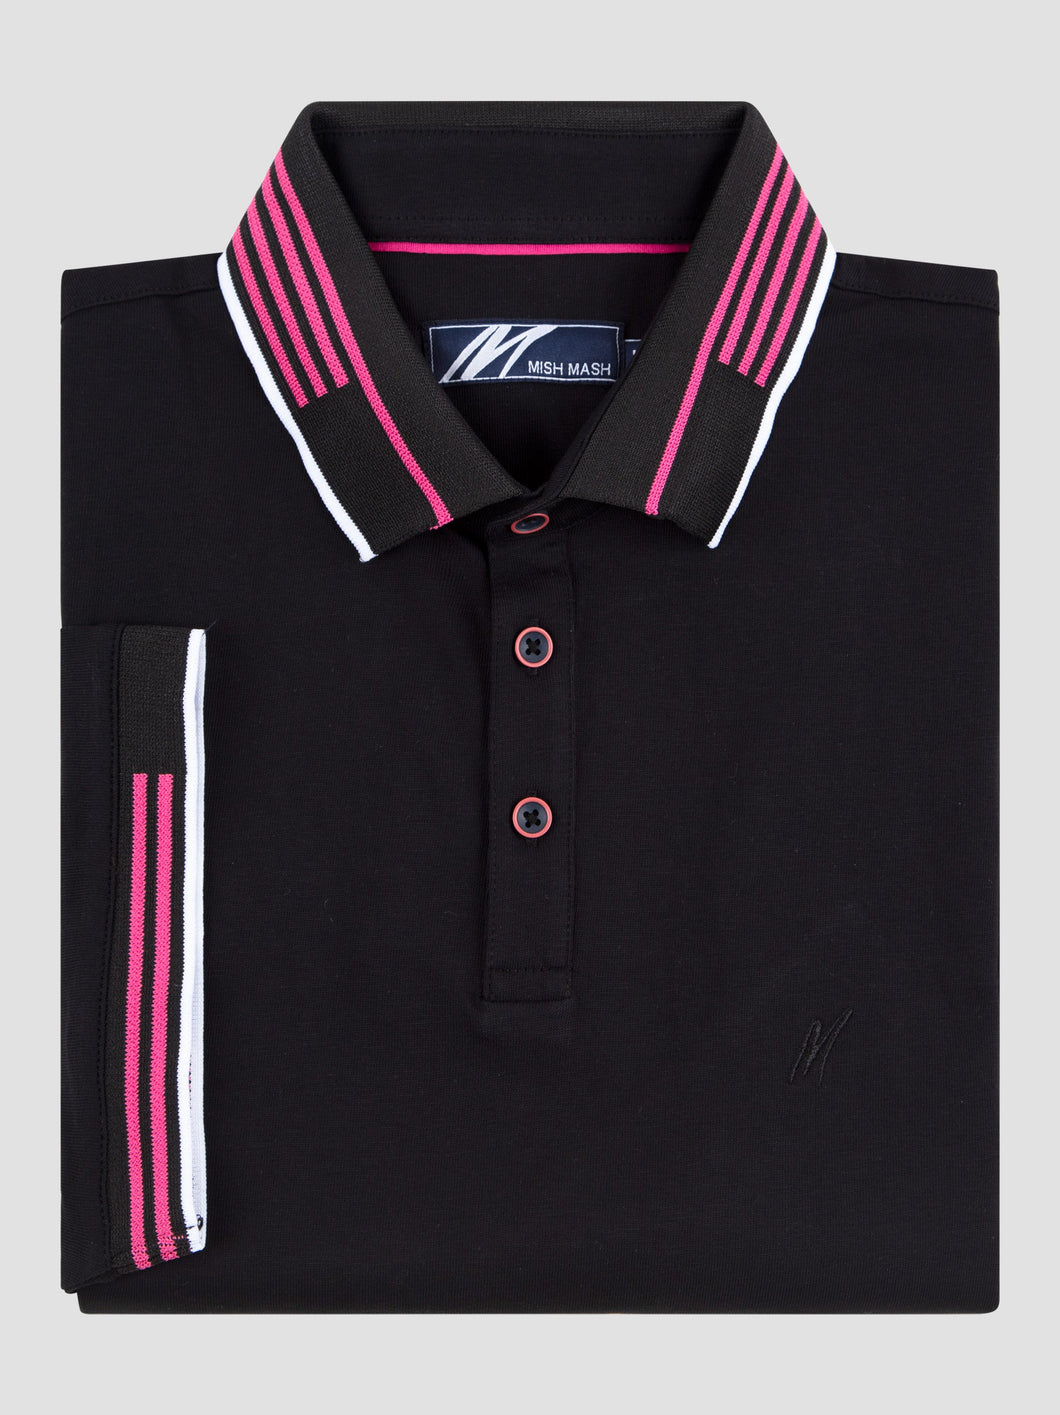 Black and Pink Polo Shirt - Oslo | Mish Mash